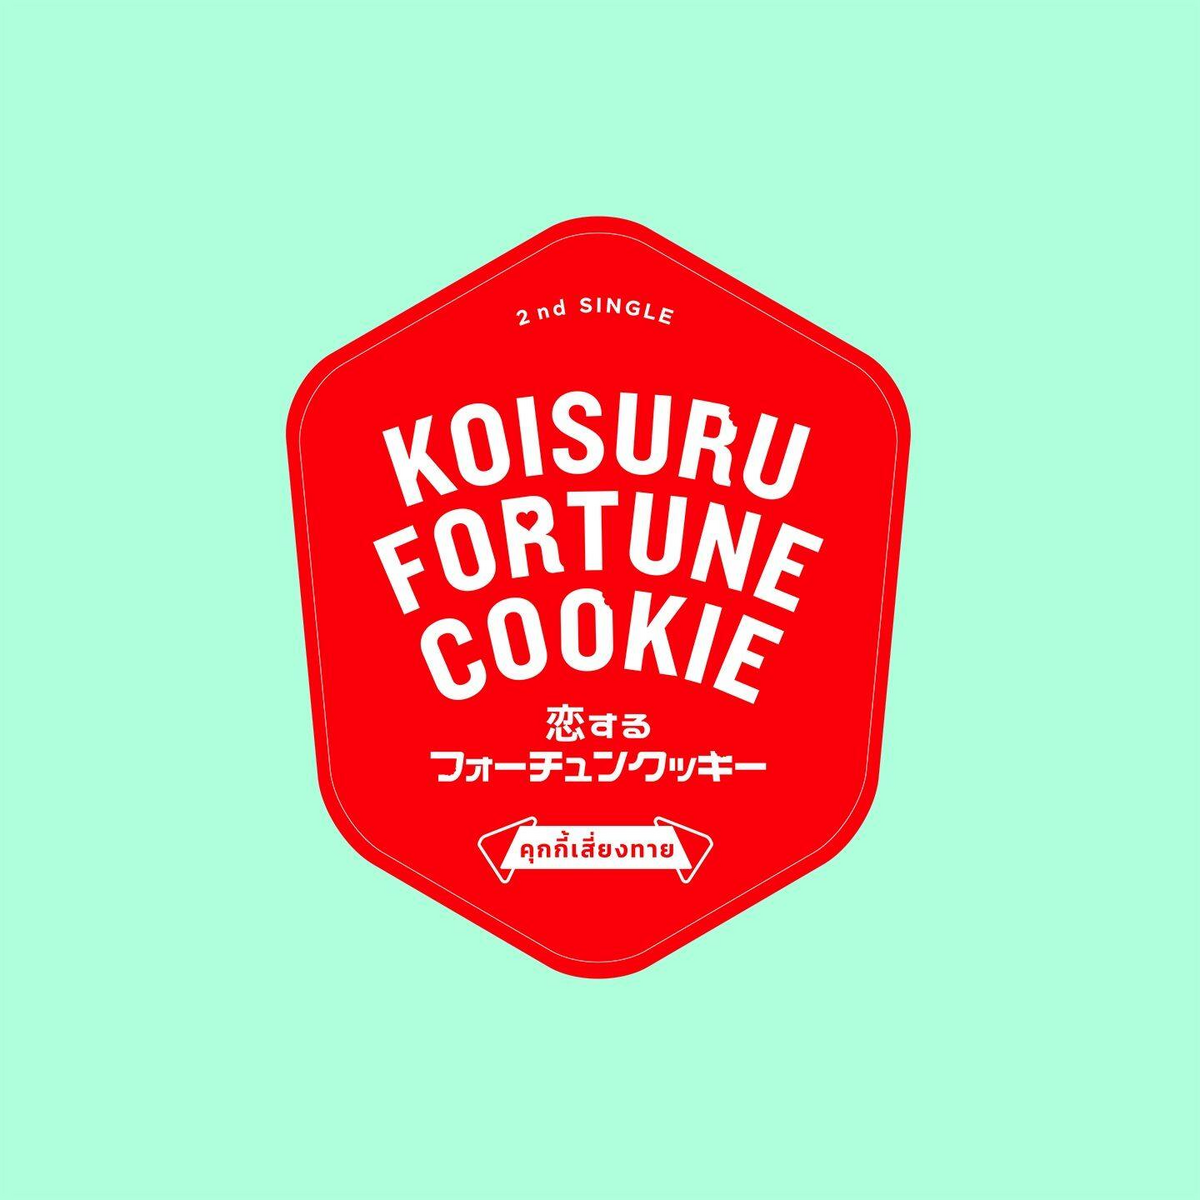 Koi Suru Fortune Cookie - Wikipedia